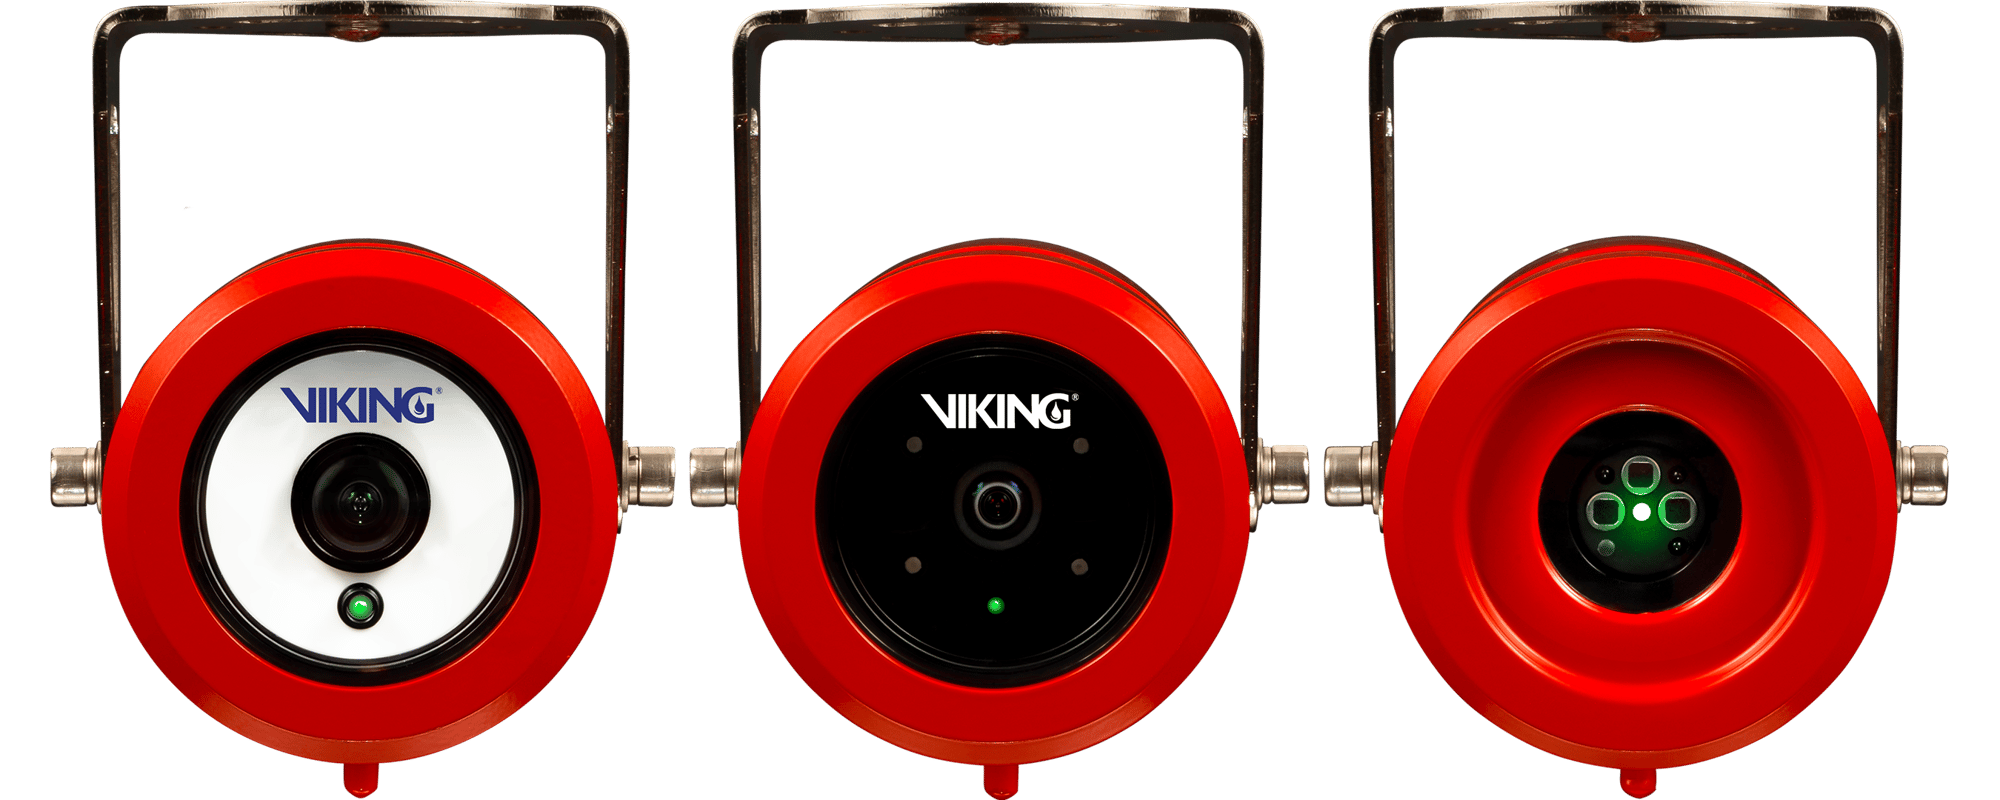 Viking-VSF-Video-Flame-Detectors